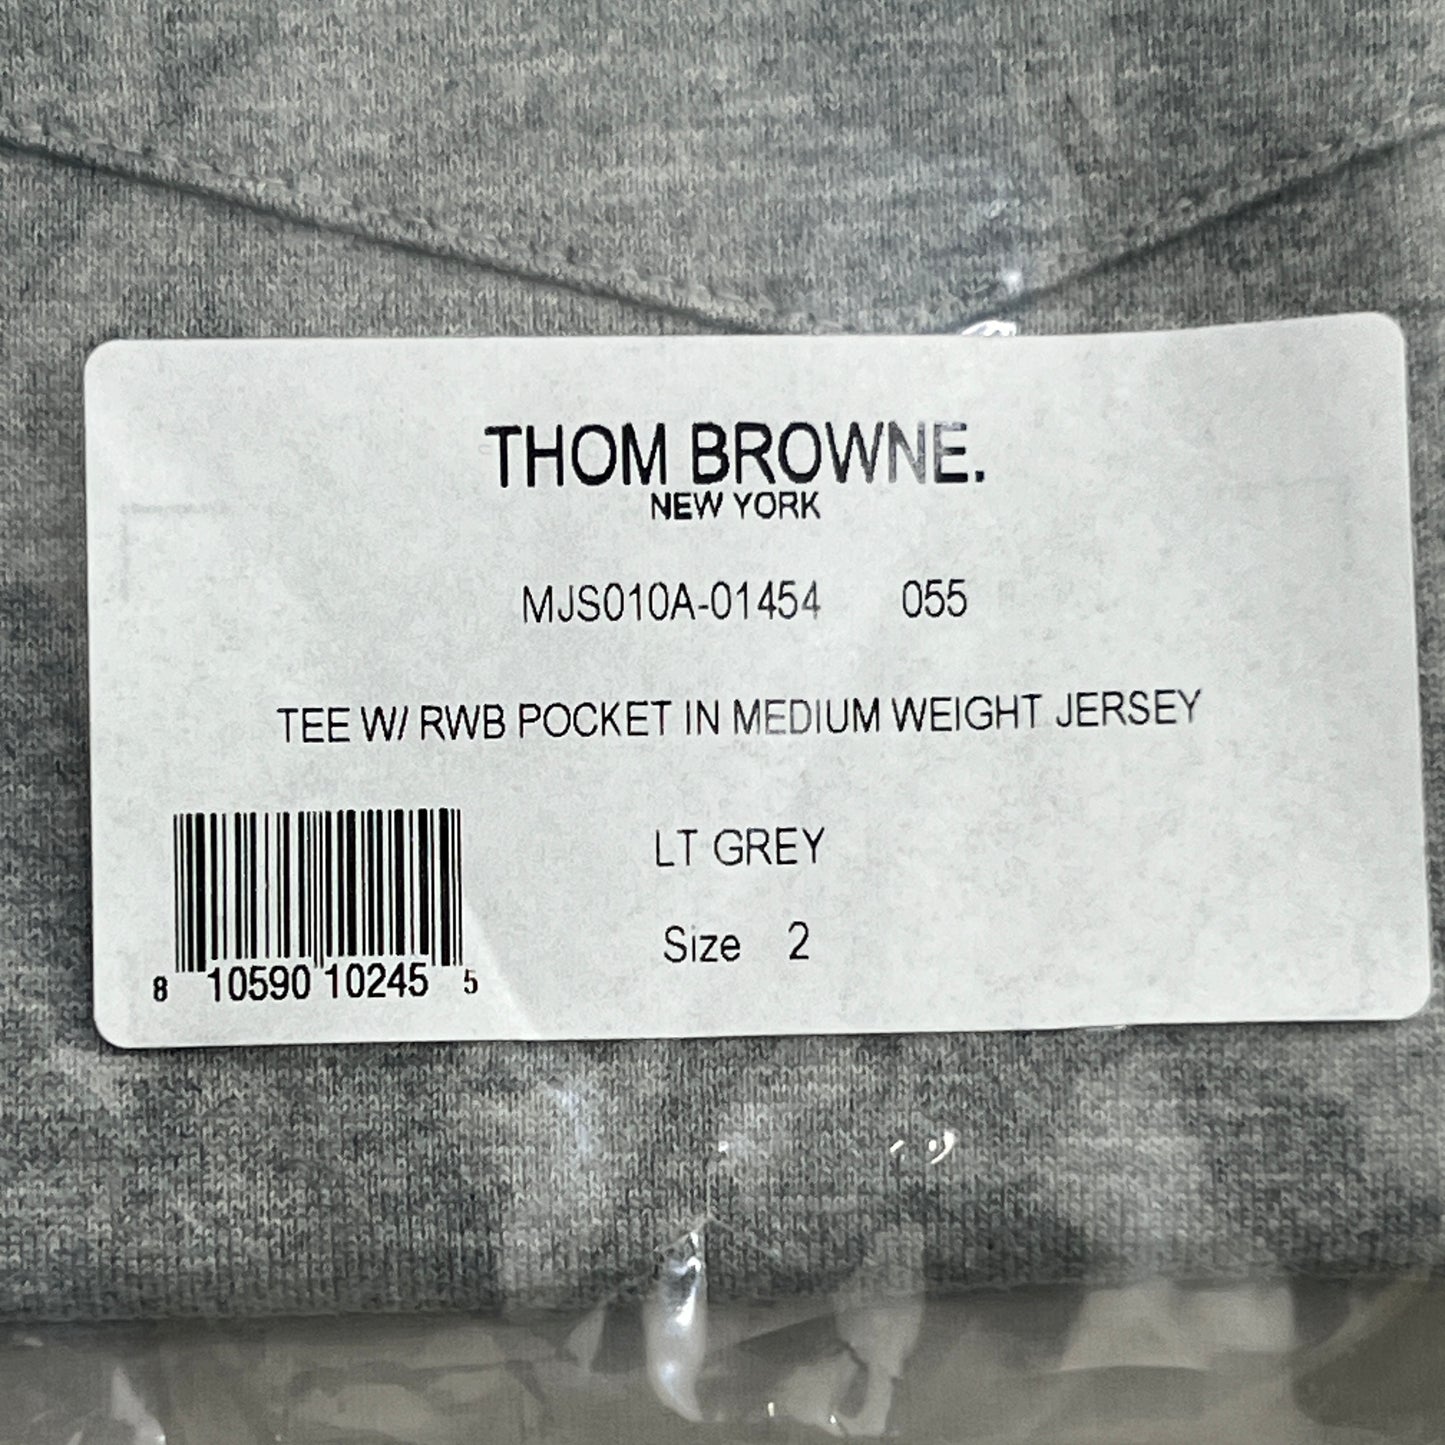 THOM BROWNE SS Tee RWB Pocket Tee in Medium Weight Jersey Light Grey Size 2 (New)